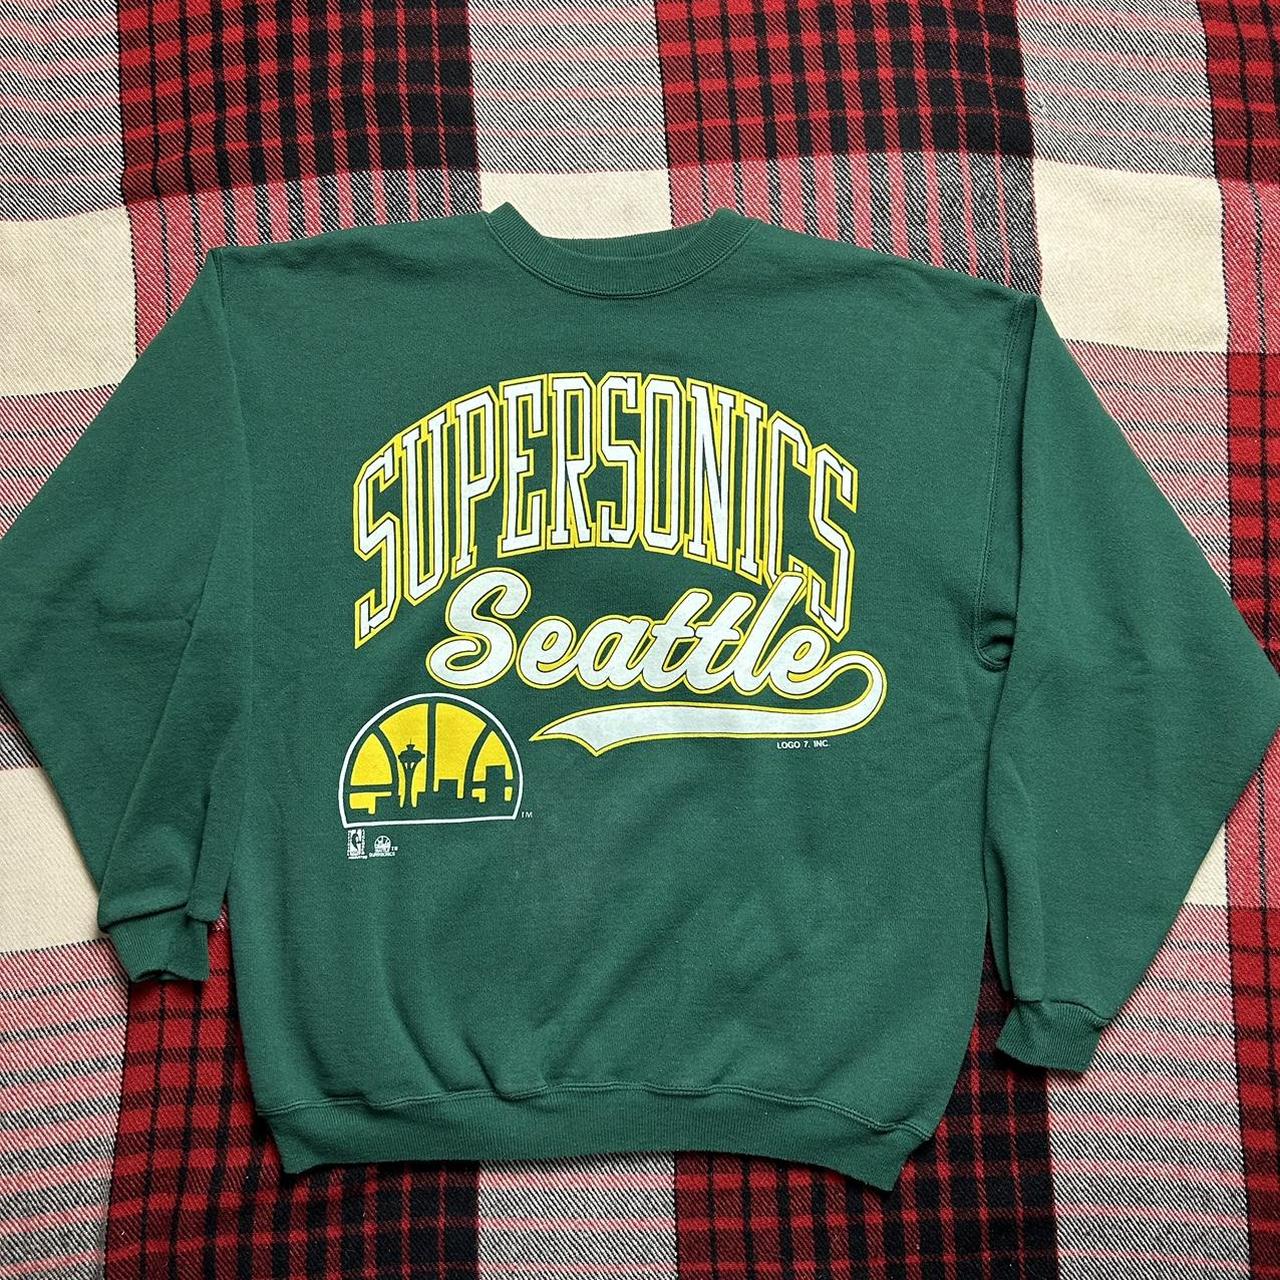 Vintage Seattle Supersonics NBA Crewneck sweatshirt. Tagged as a large